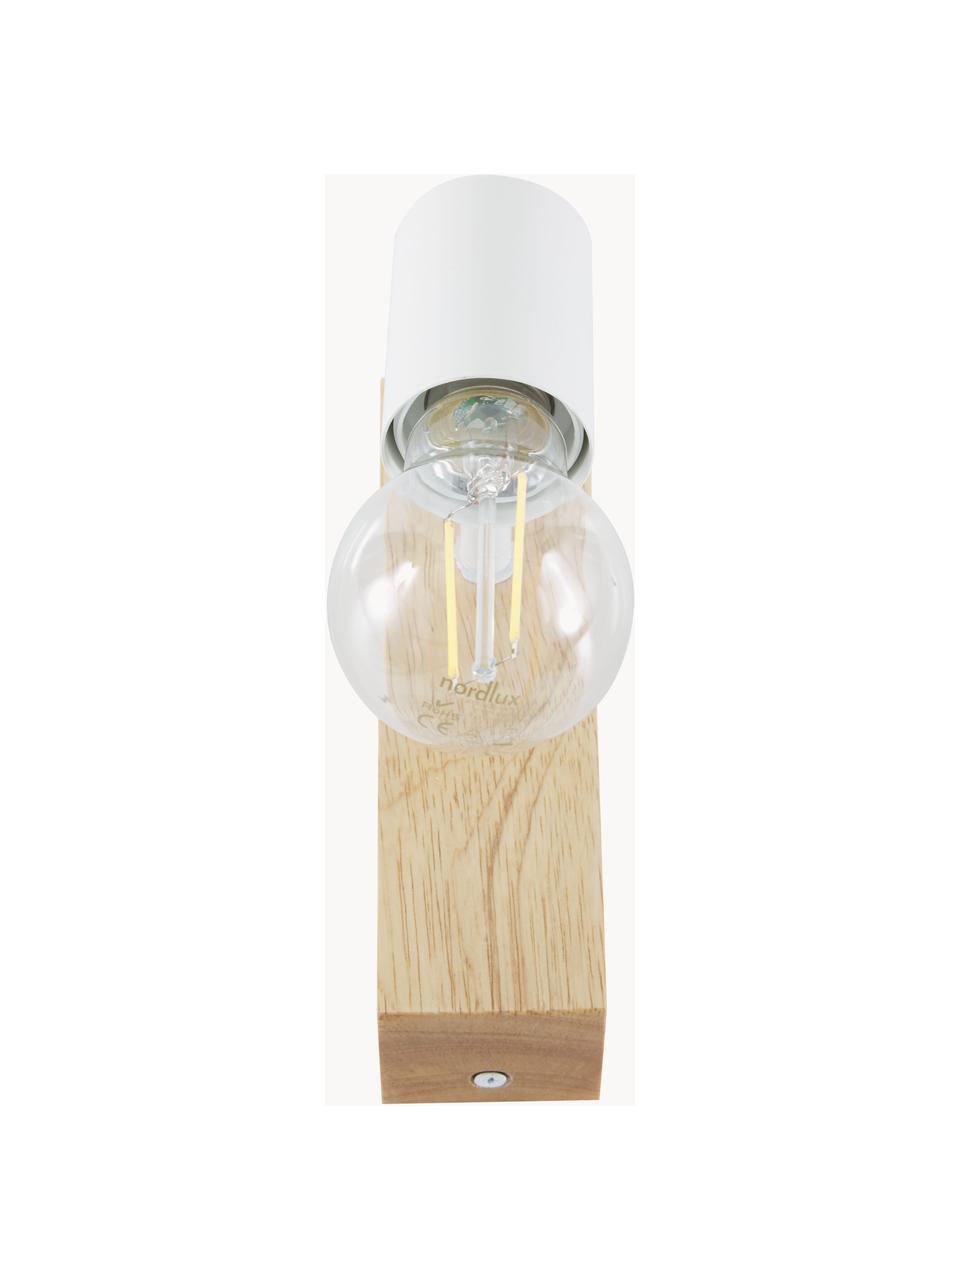 Verstelbare wandlamp Townshend van hout, Fitting: gecoat metaal, Wit, helder hout, D 12 x H 17 cm